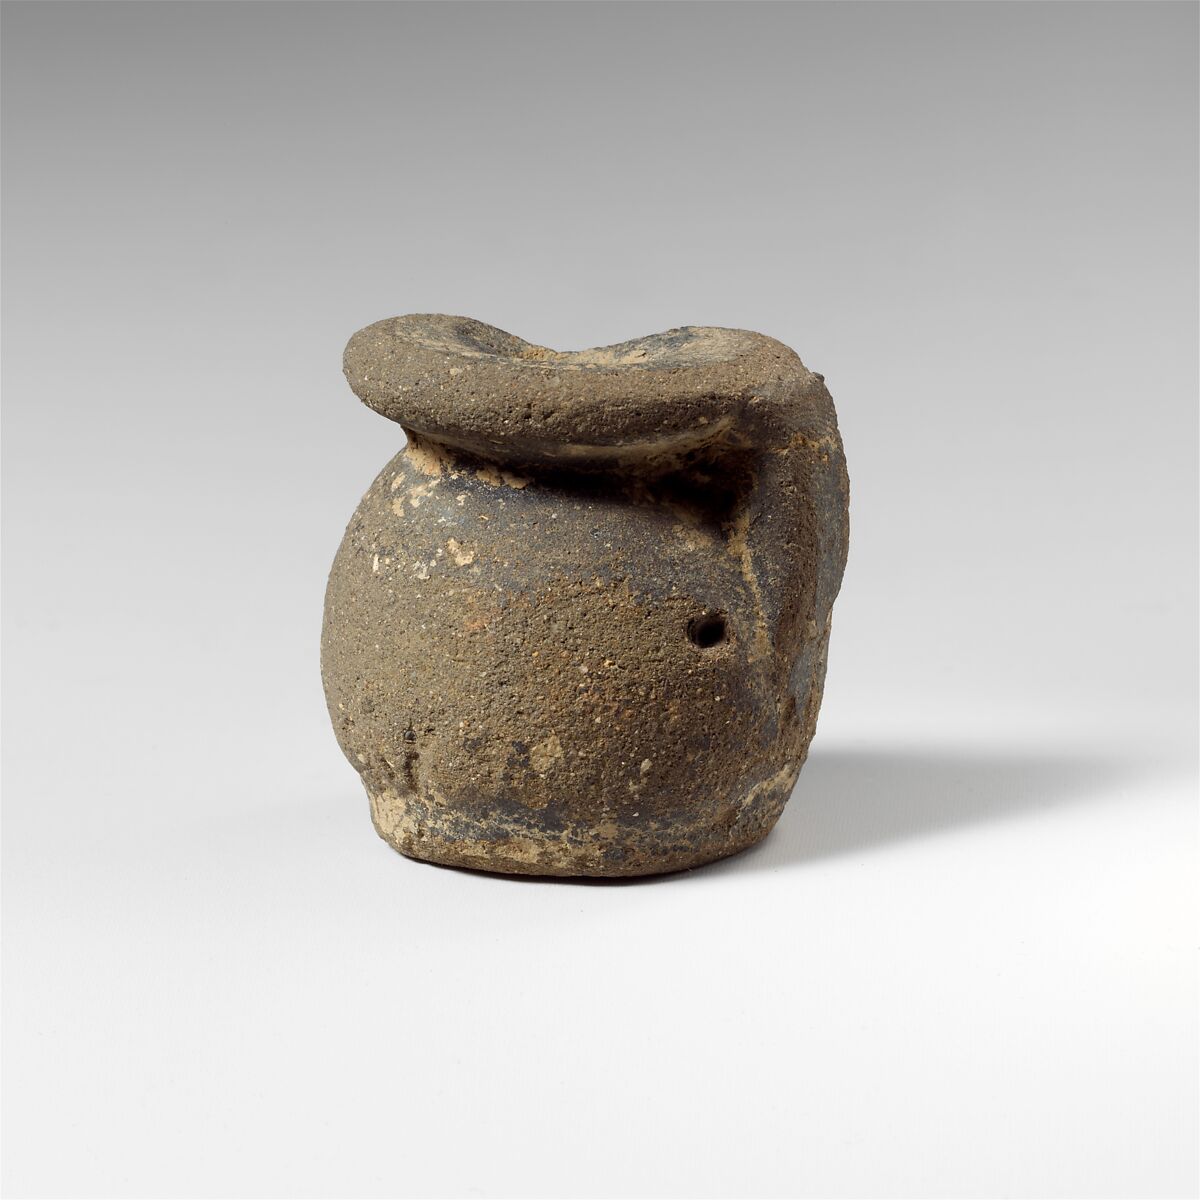 Terracotta miniature vase with one handle, Terracotta, Greek, Laconian 